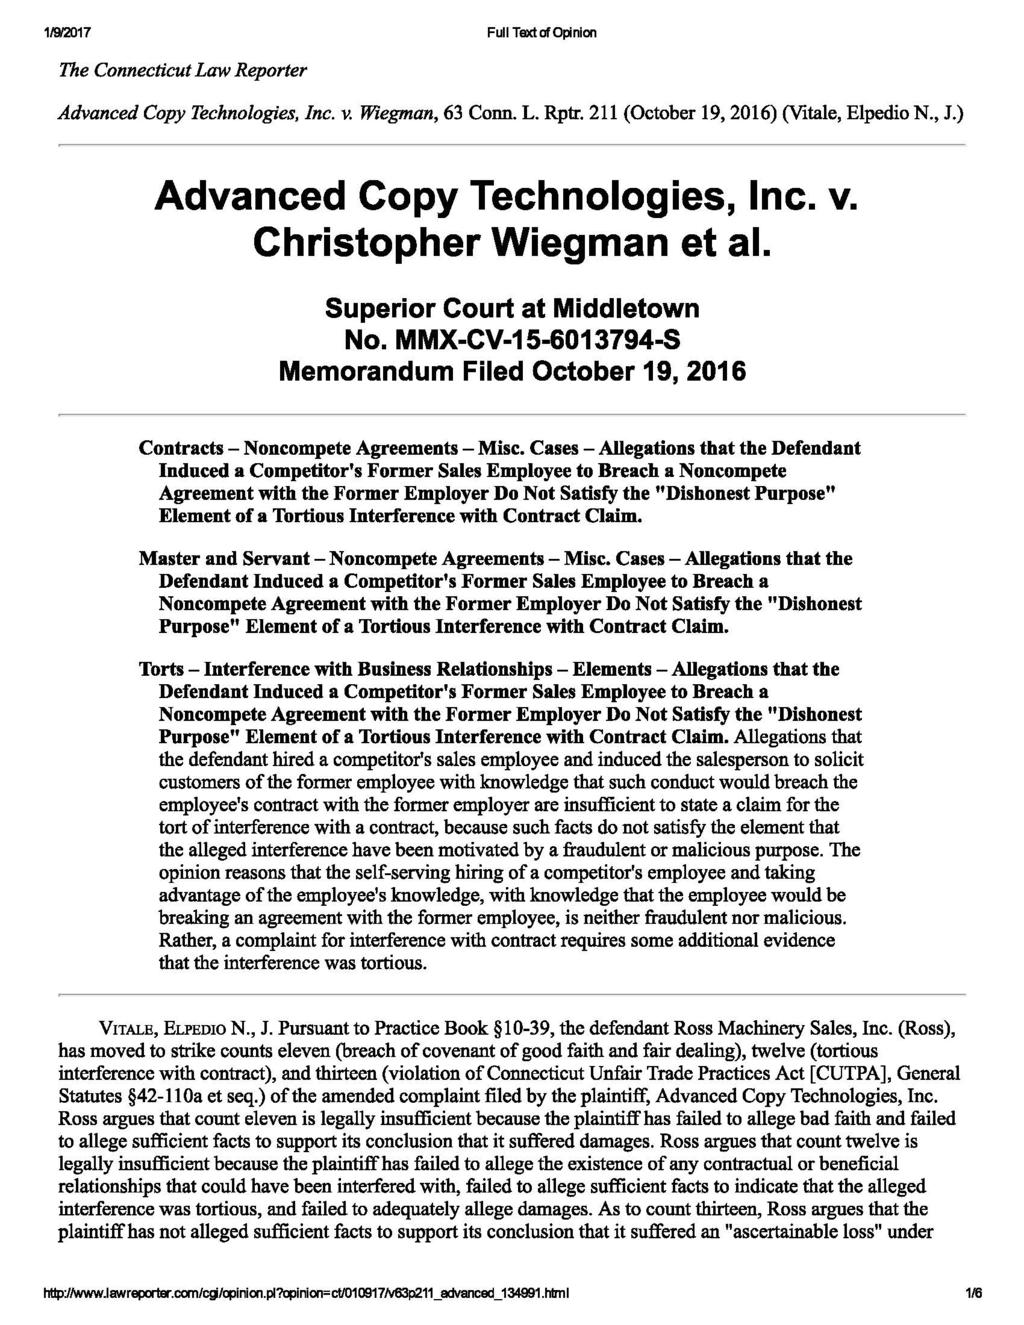 The Connecticut Law Reporter Advanced Copy Technologi.es, Inc. v. Wiegman, 63 Conn. L. Rptr. 211(October19, 2016) (Vitale, Elpedio N., J.) Advanced Copy Technologies, Inc. v. Christopher Wiegman et al.